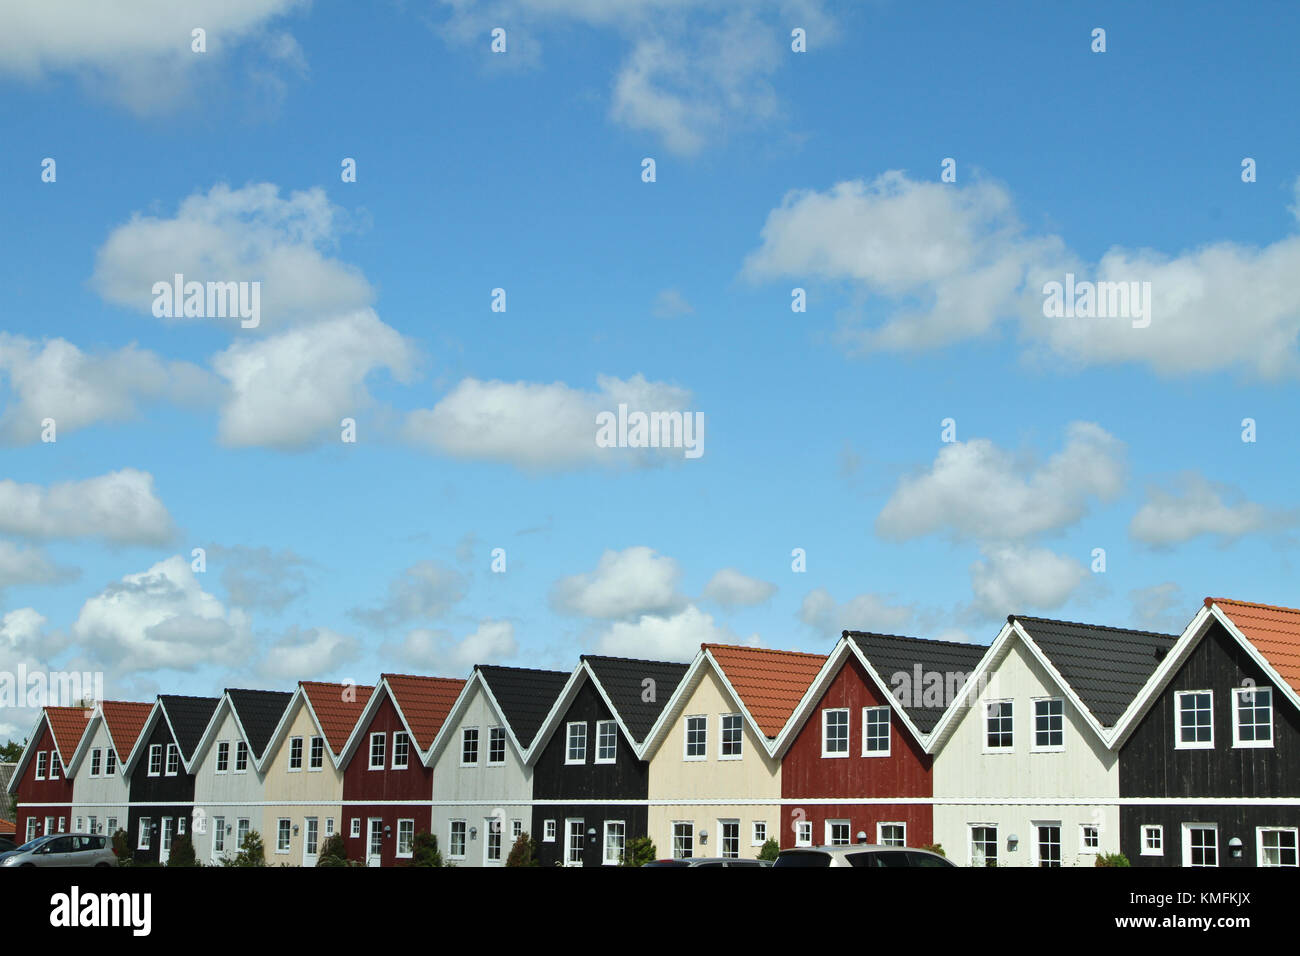 Houses in the village of Ho in Denmark Stock Photo